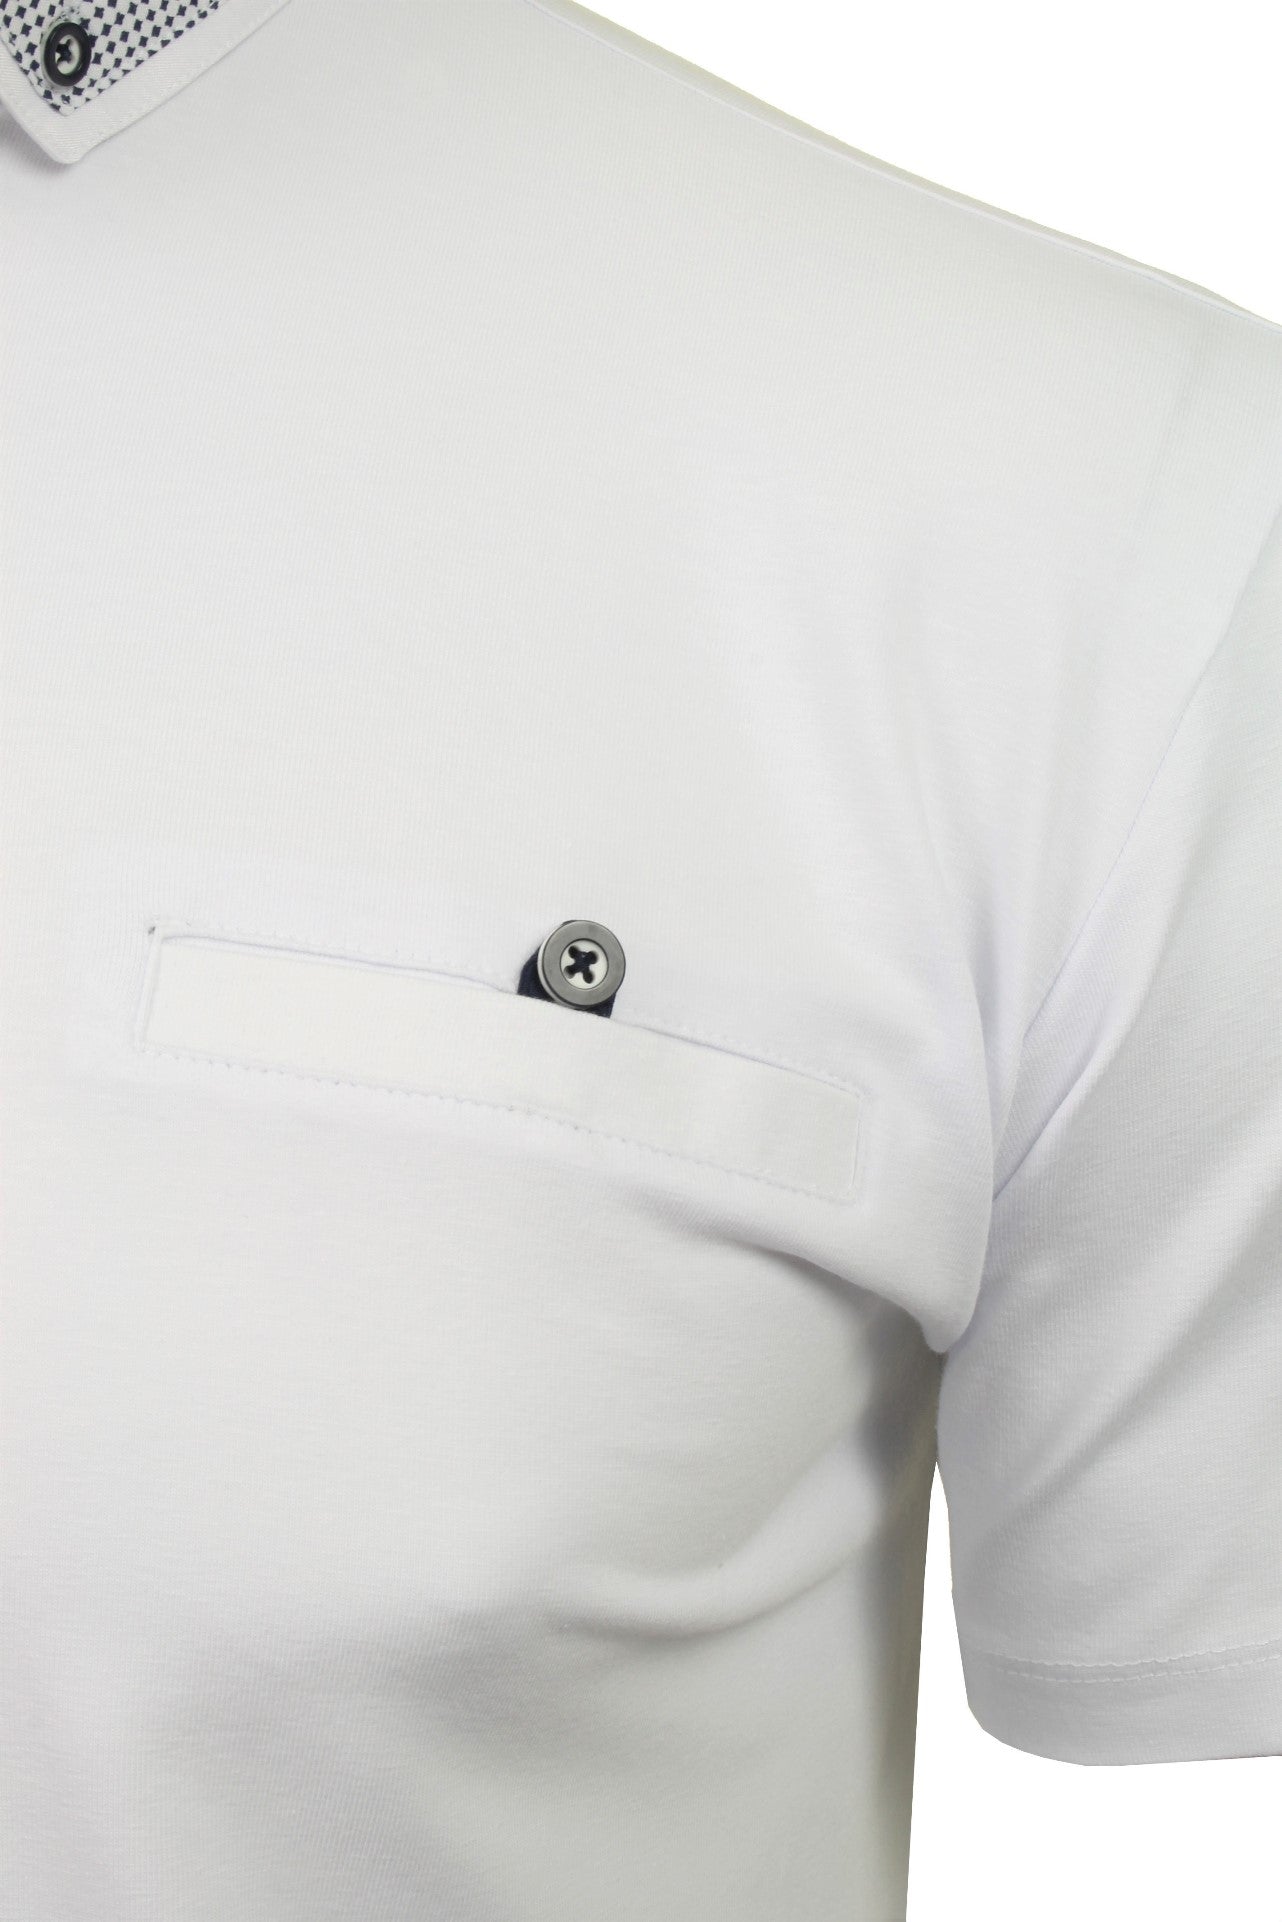 Xact Mens Short Sleeved Polo Shirt with Contrast Collar & Button Down Collar-2